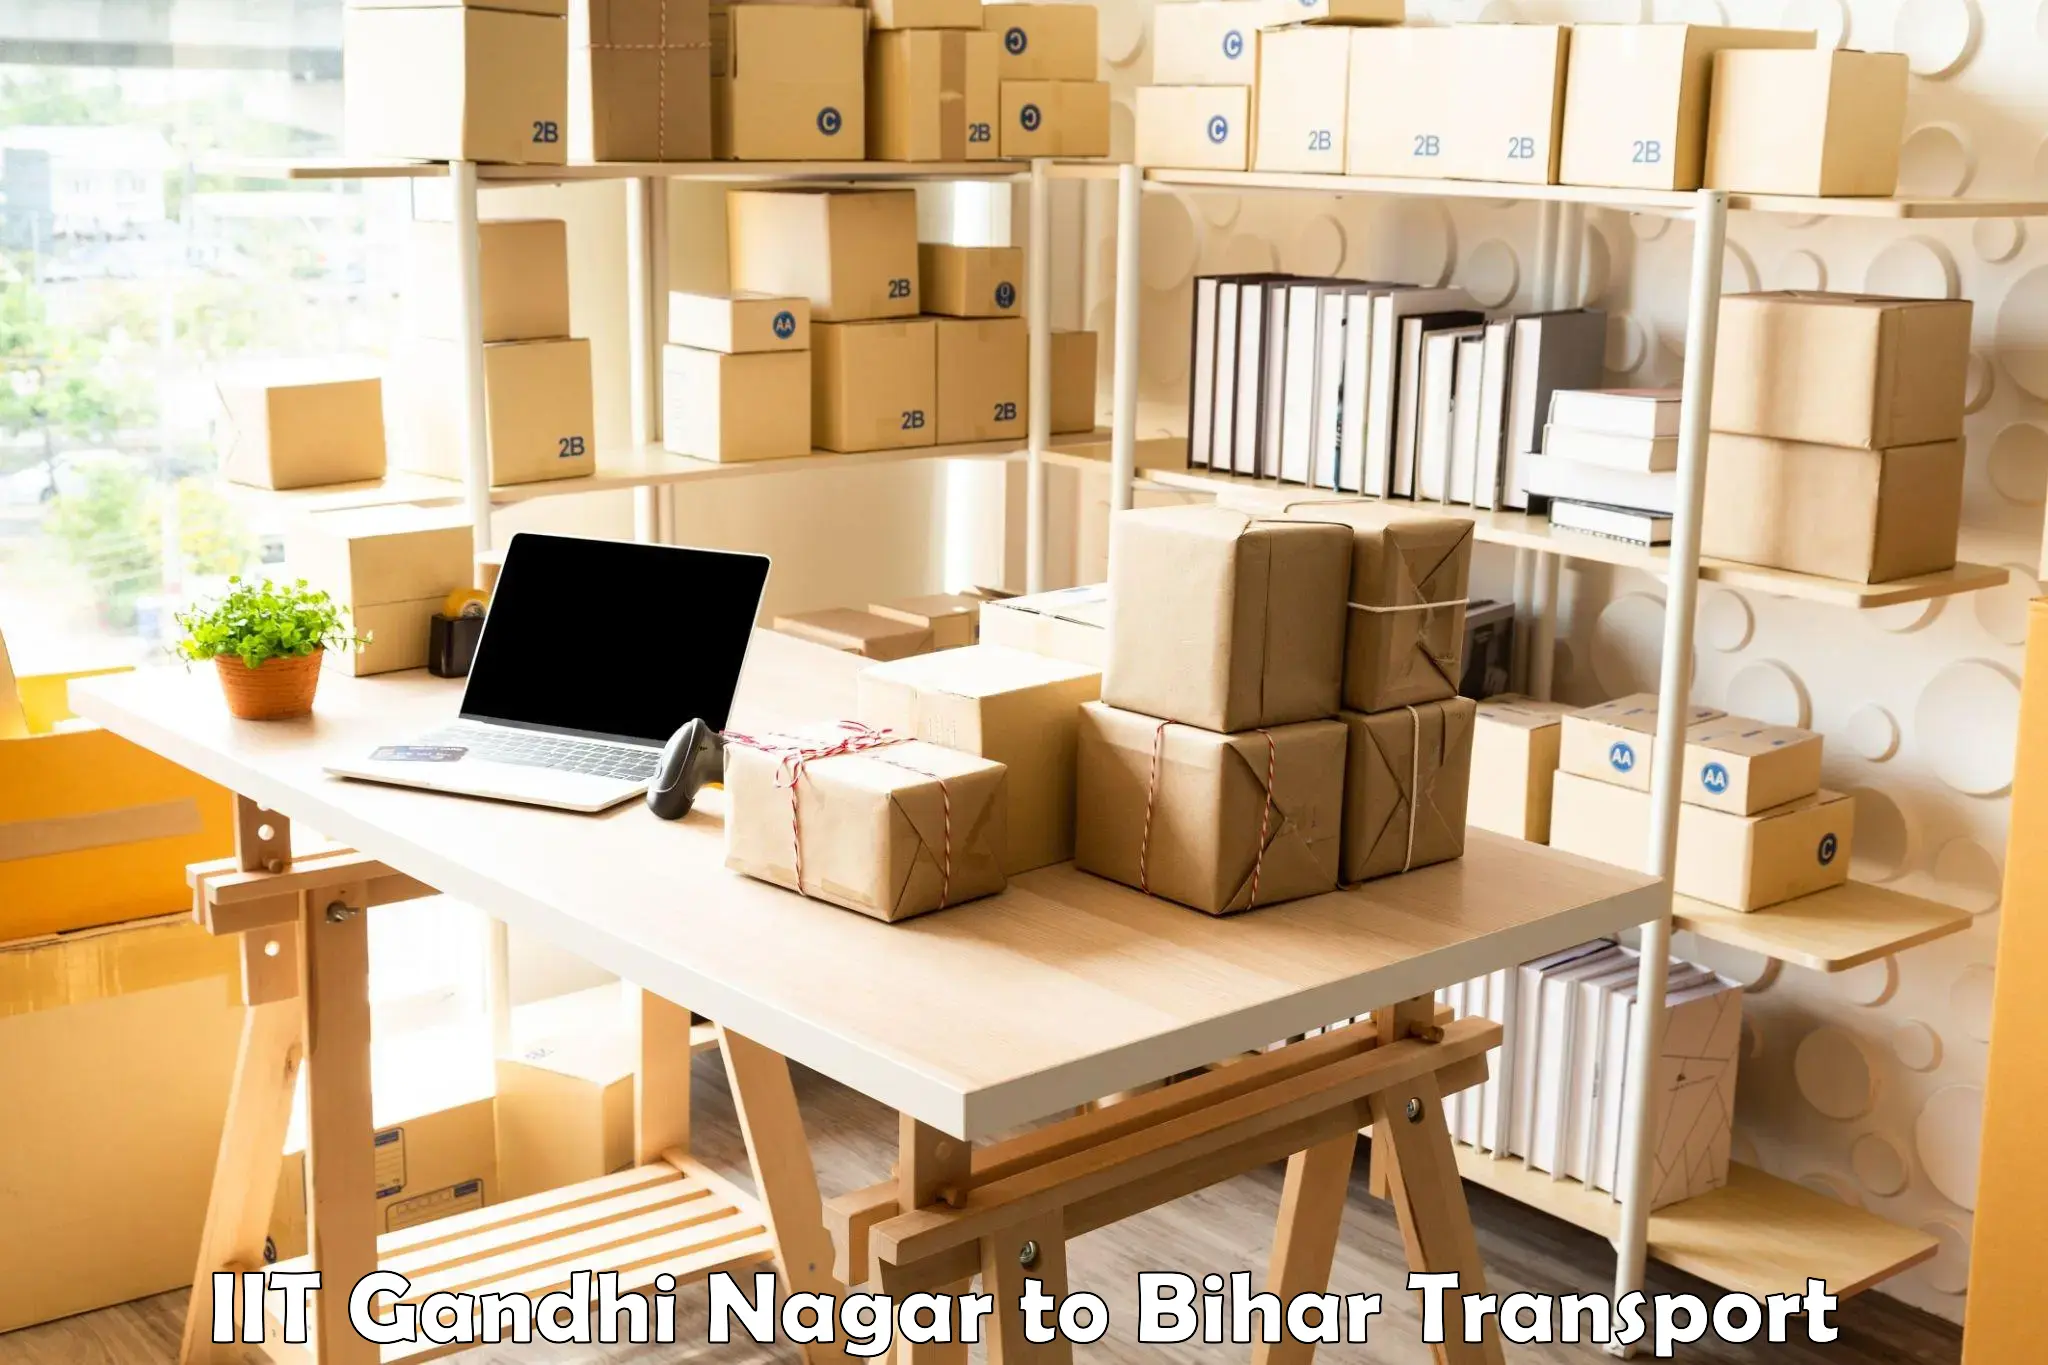 Cargo transport services IIT Gandhi Nagar to Bettiah